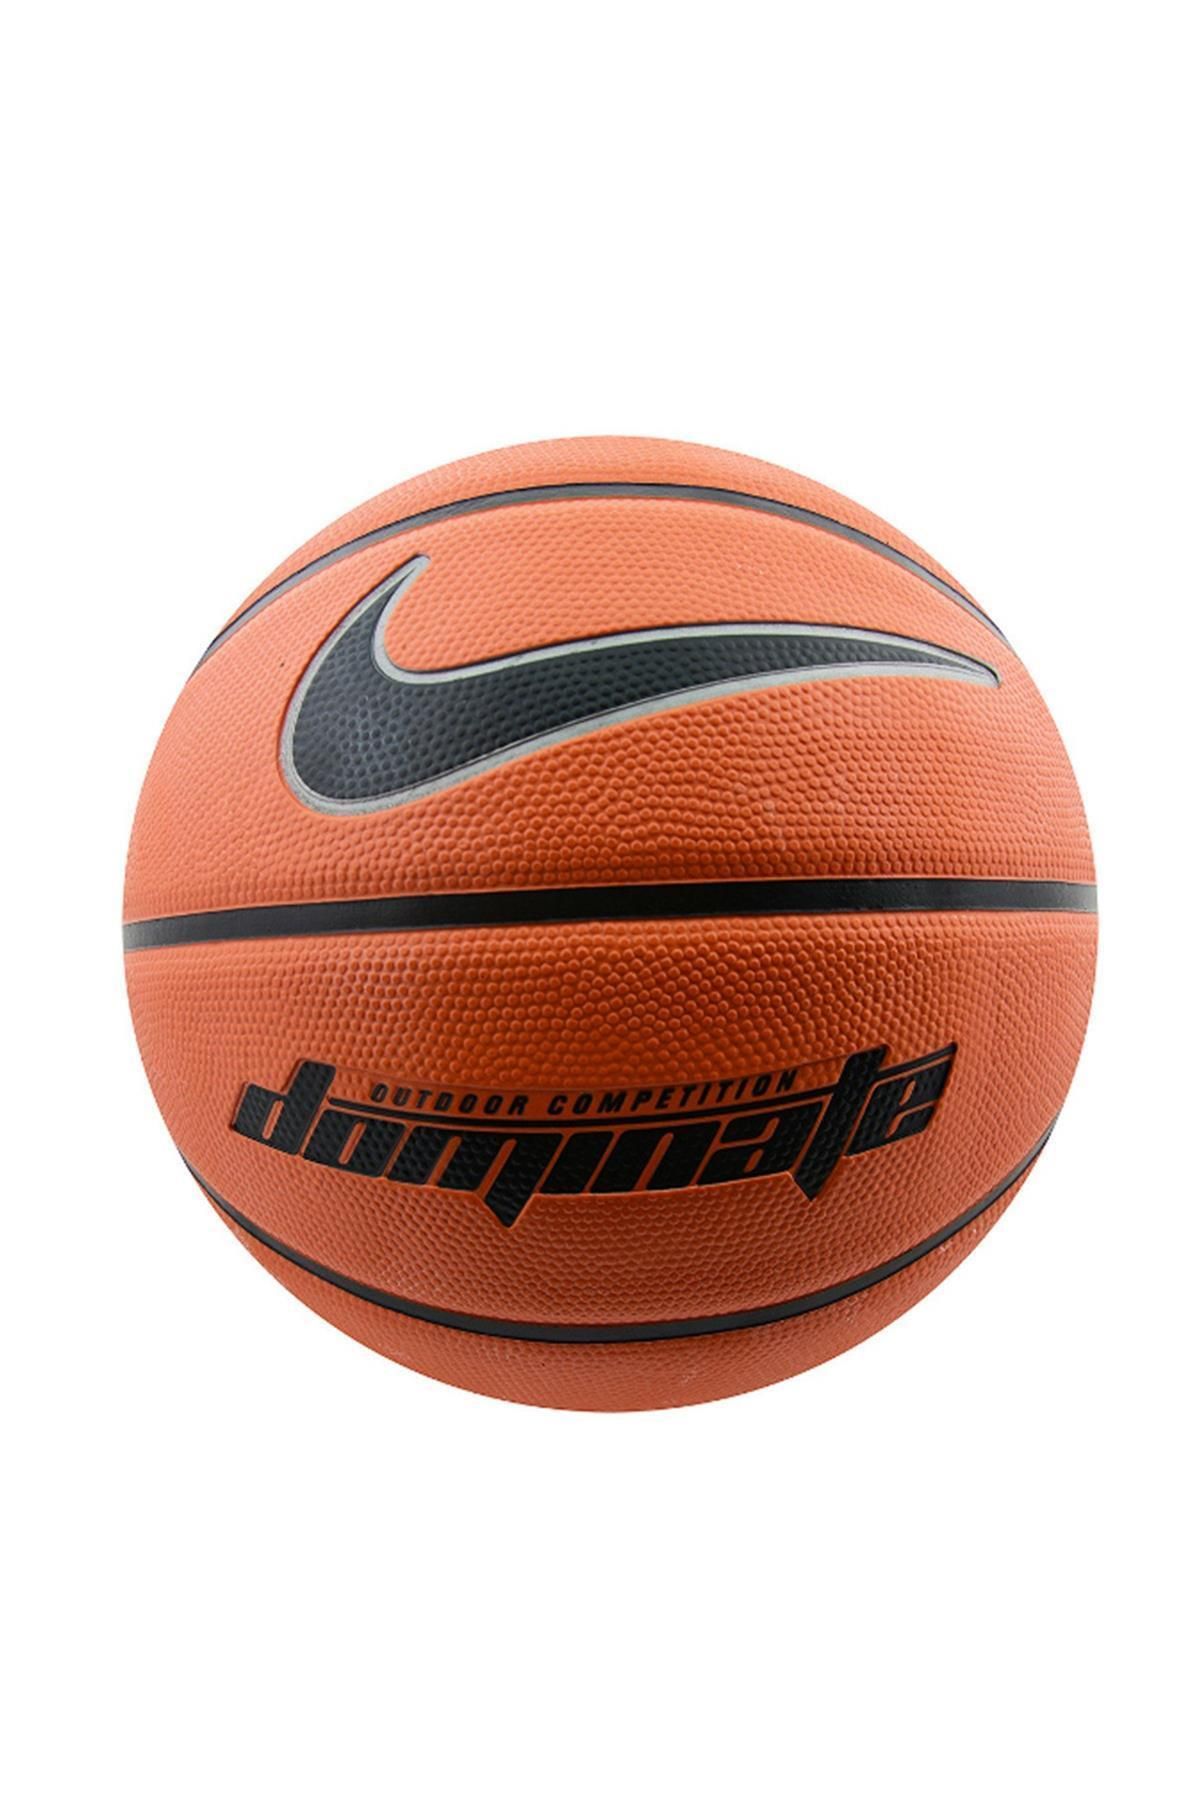 Nike Dominate No 7 Kauçuk Basketbol Topu Turuncu Nkı00-847